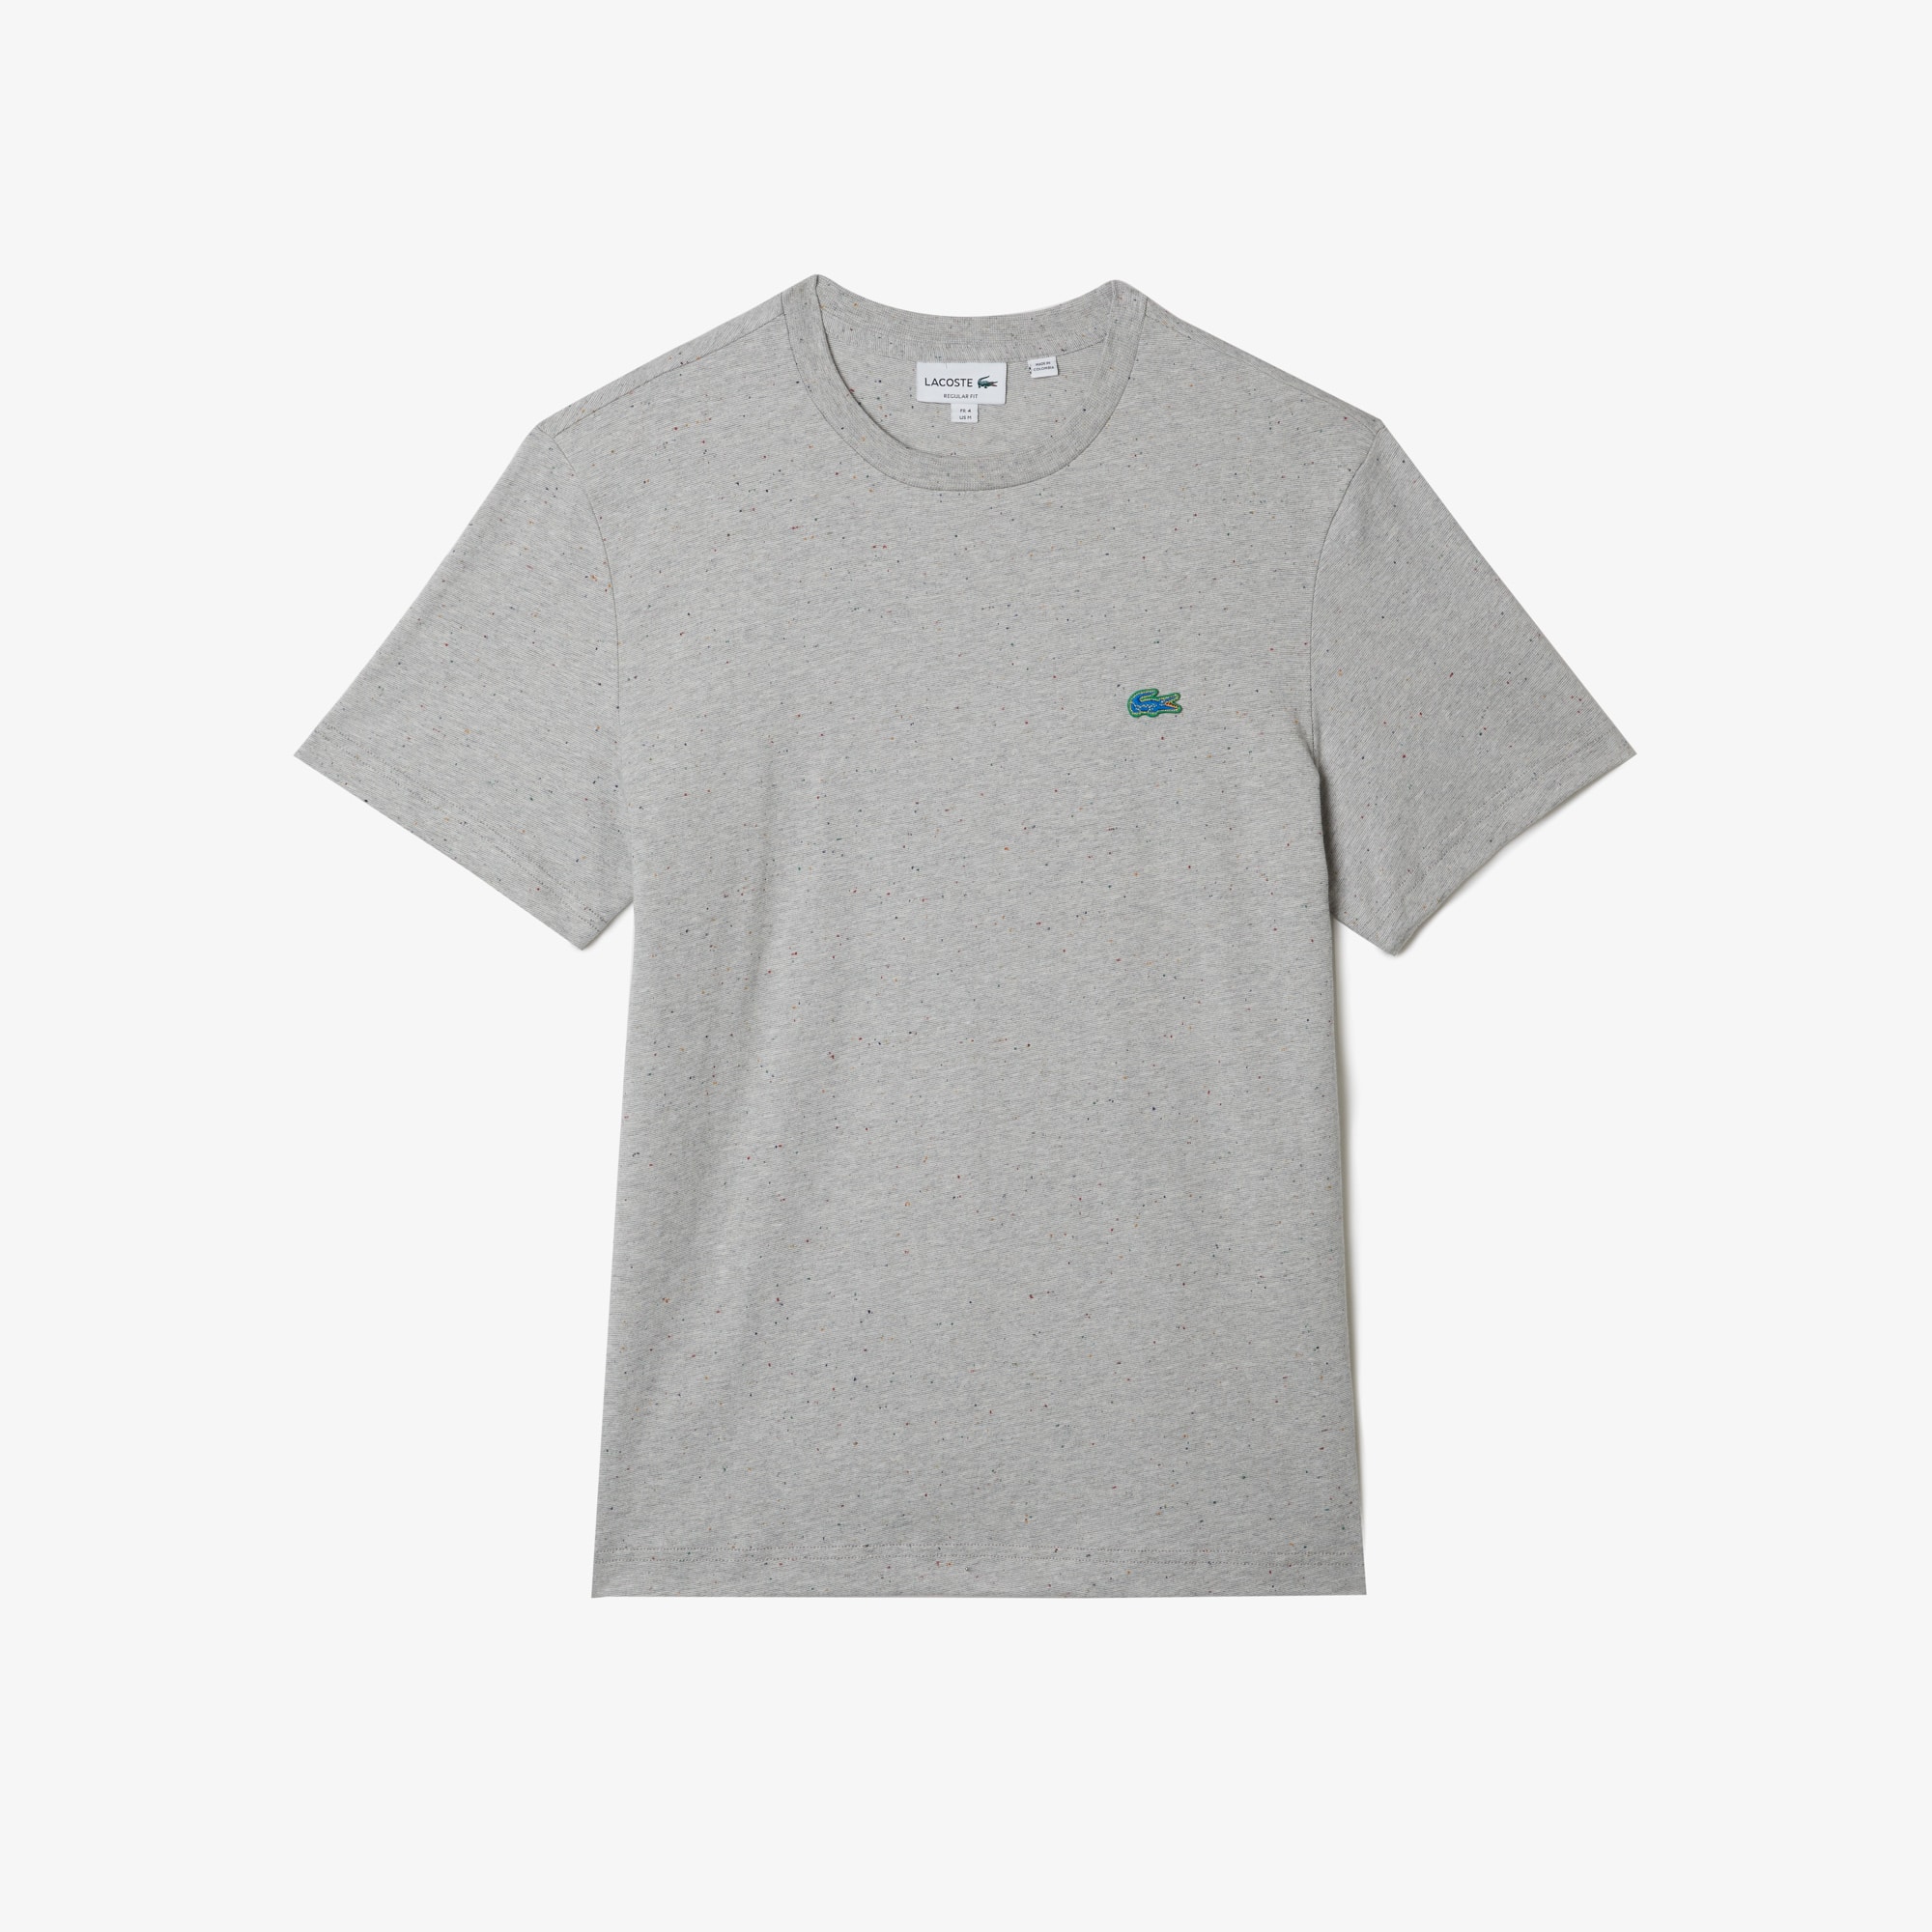 Lacoste Mens Regular Fit Speckled Print Cotton Jersey T-Shirt